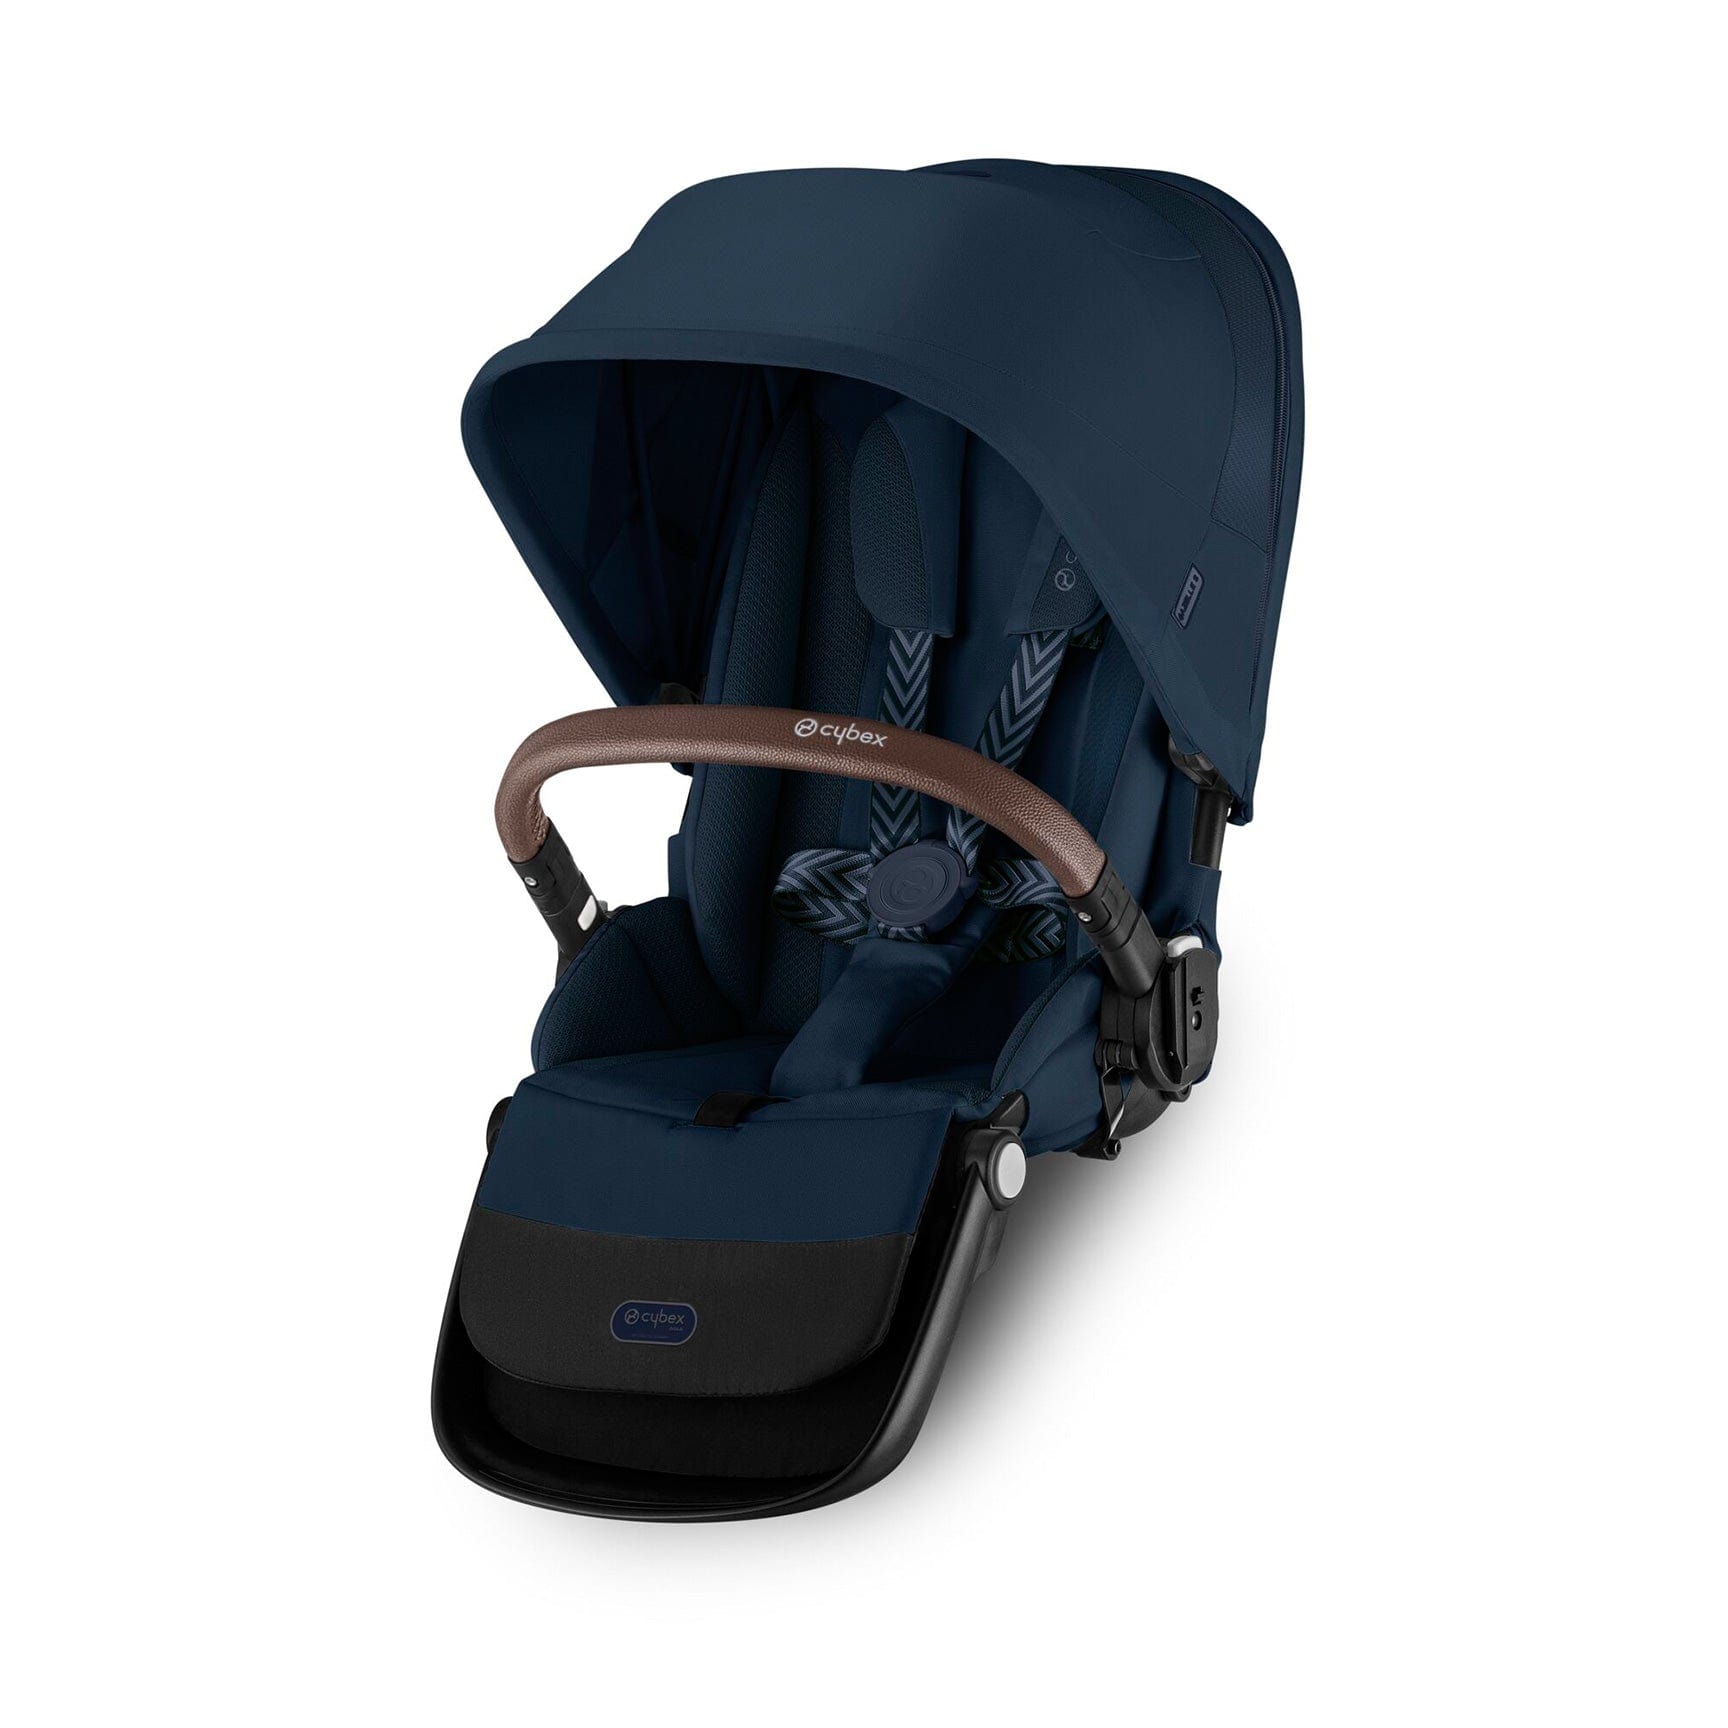 Cybex baby prams Cybex Gazelle S Seat Unit - Ocean Blue 522002767